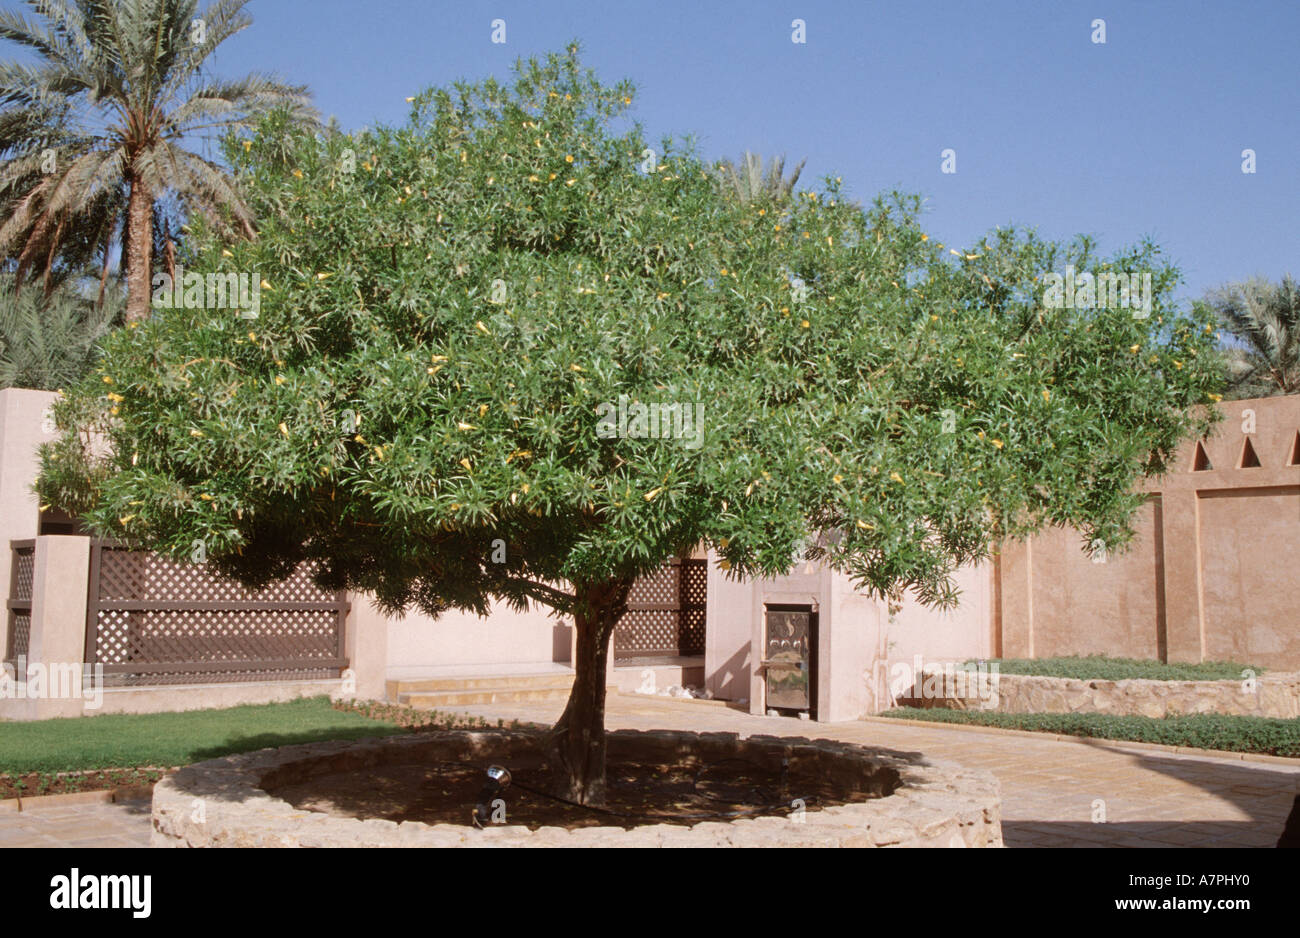 Lucky Nut, Yellow Oleander, Mexican Oleander, Be-Still, Bestill, Bestill tree (Thevetia peruviana), single tree in a courtyard, Stock Photo